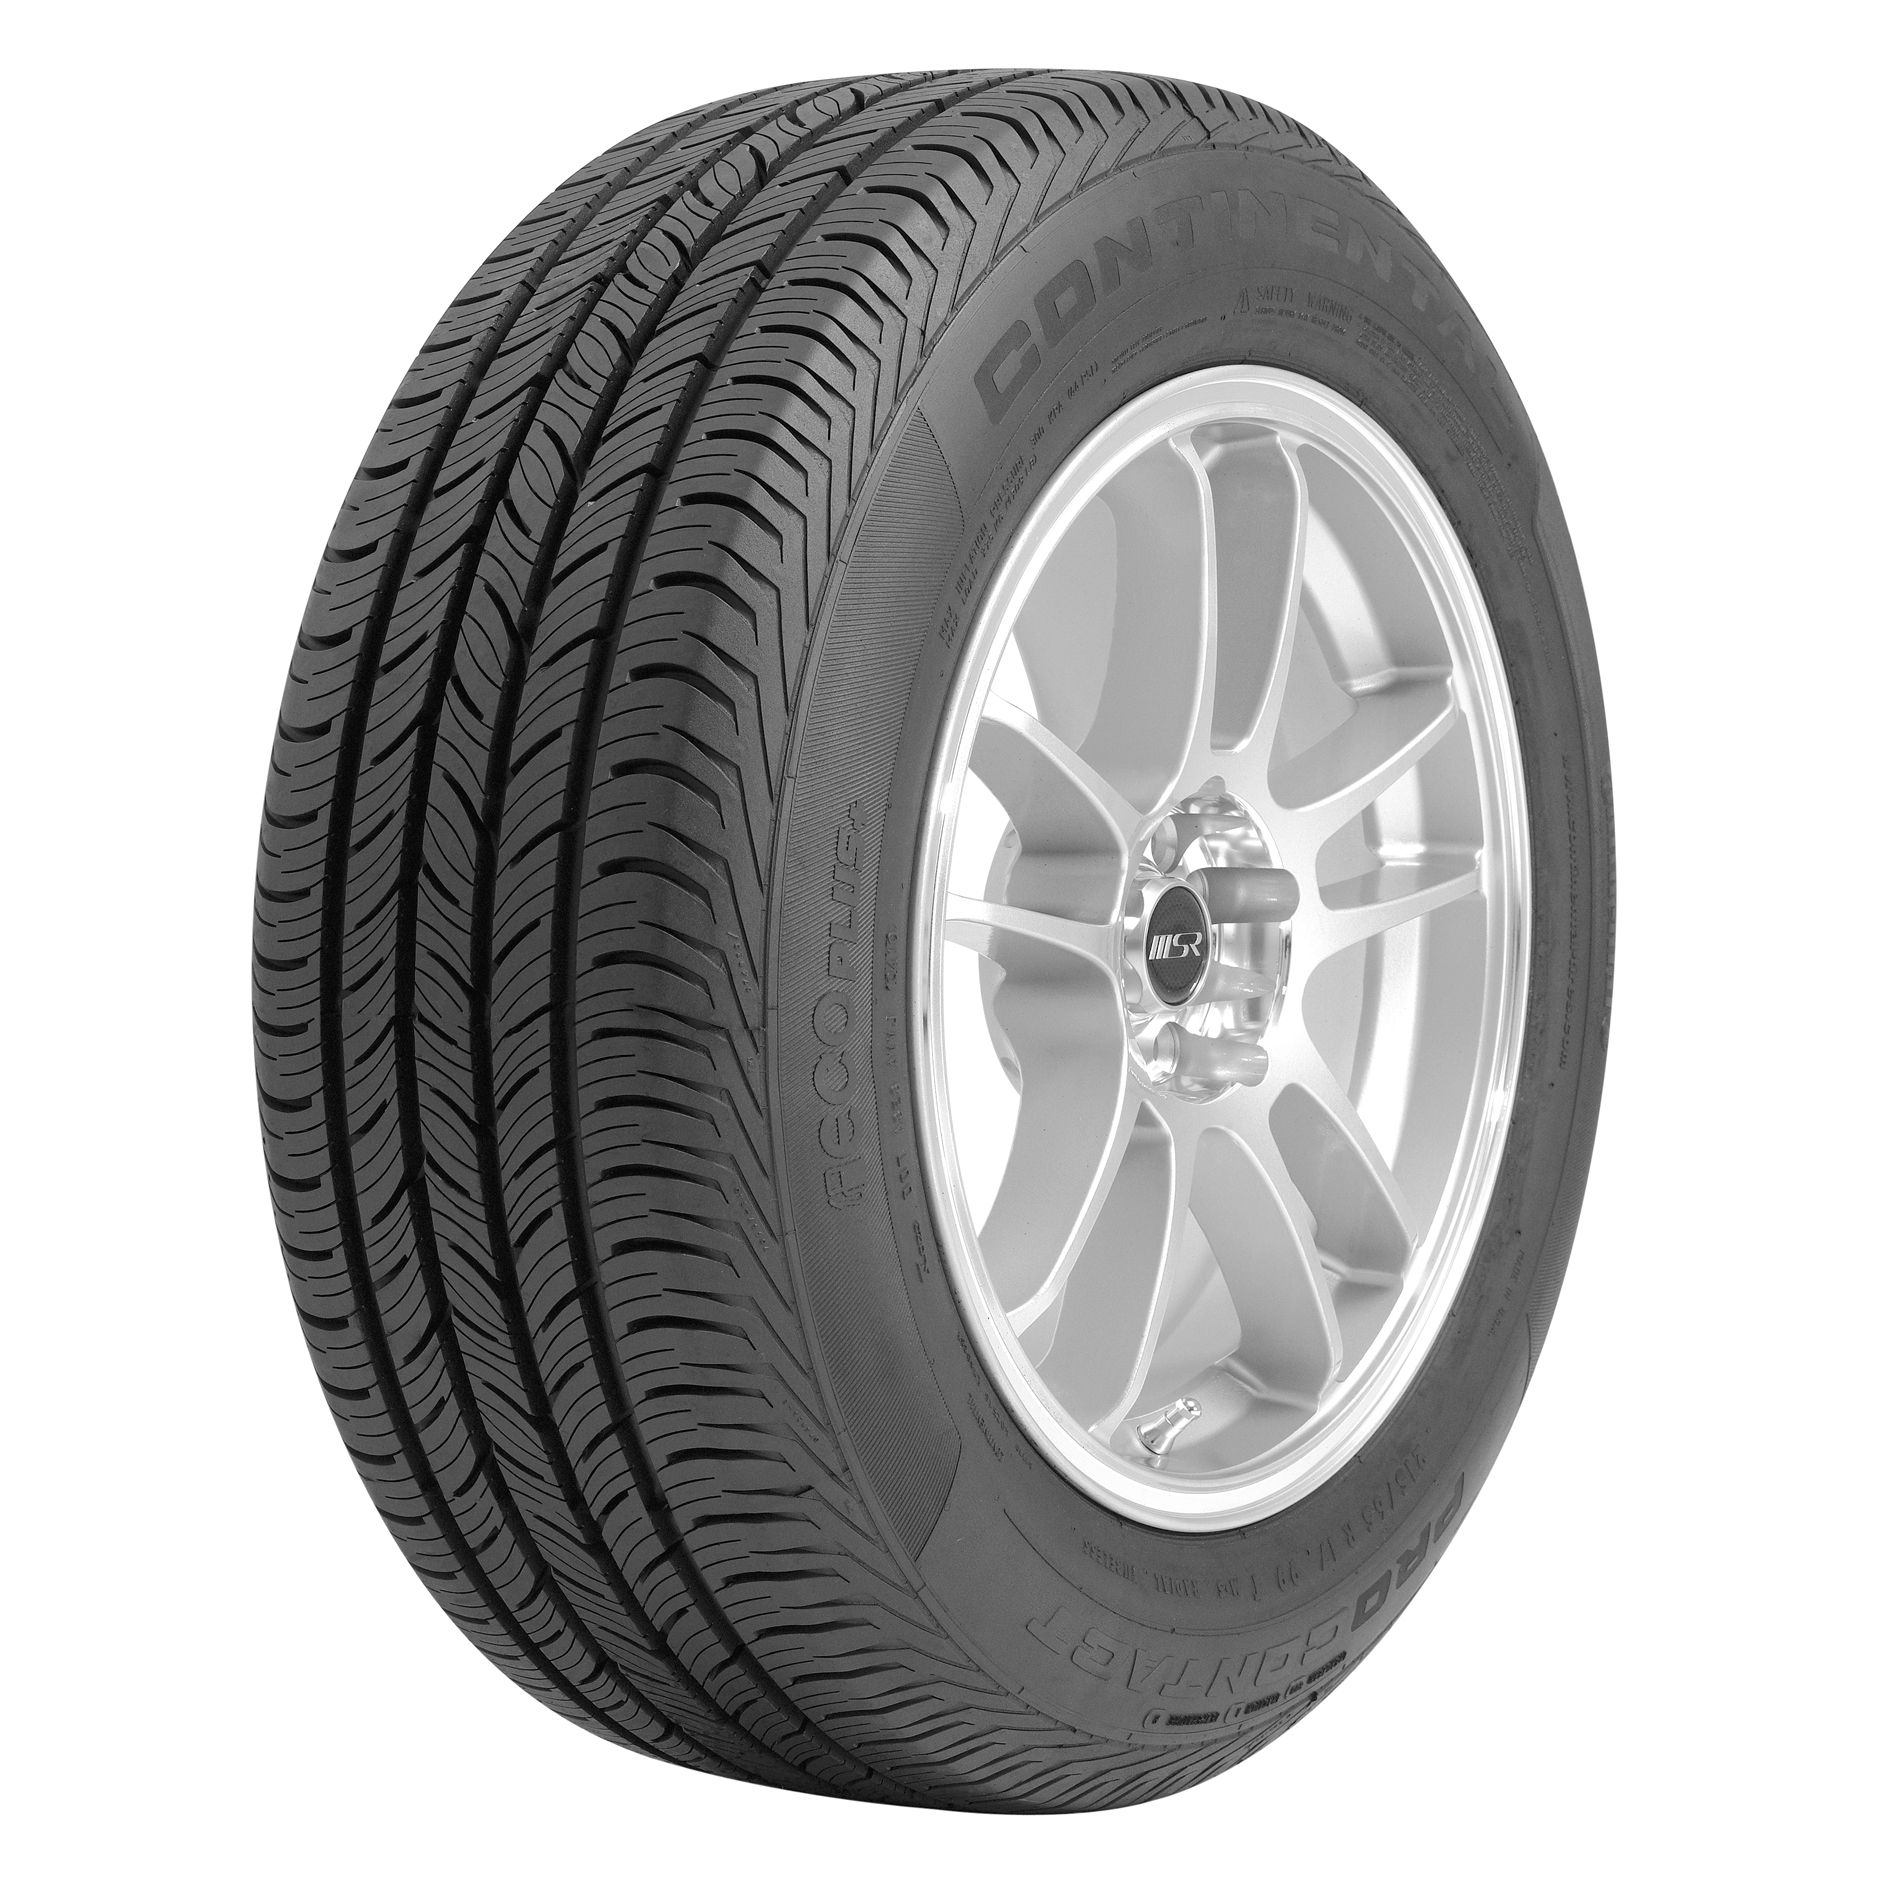 Continental Pro Contact Eco Plus - 215/65R17 99T BW - All-Season Tire